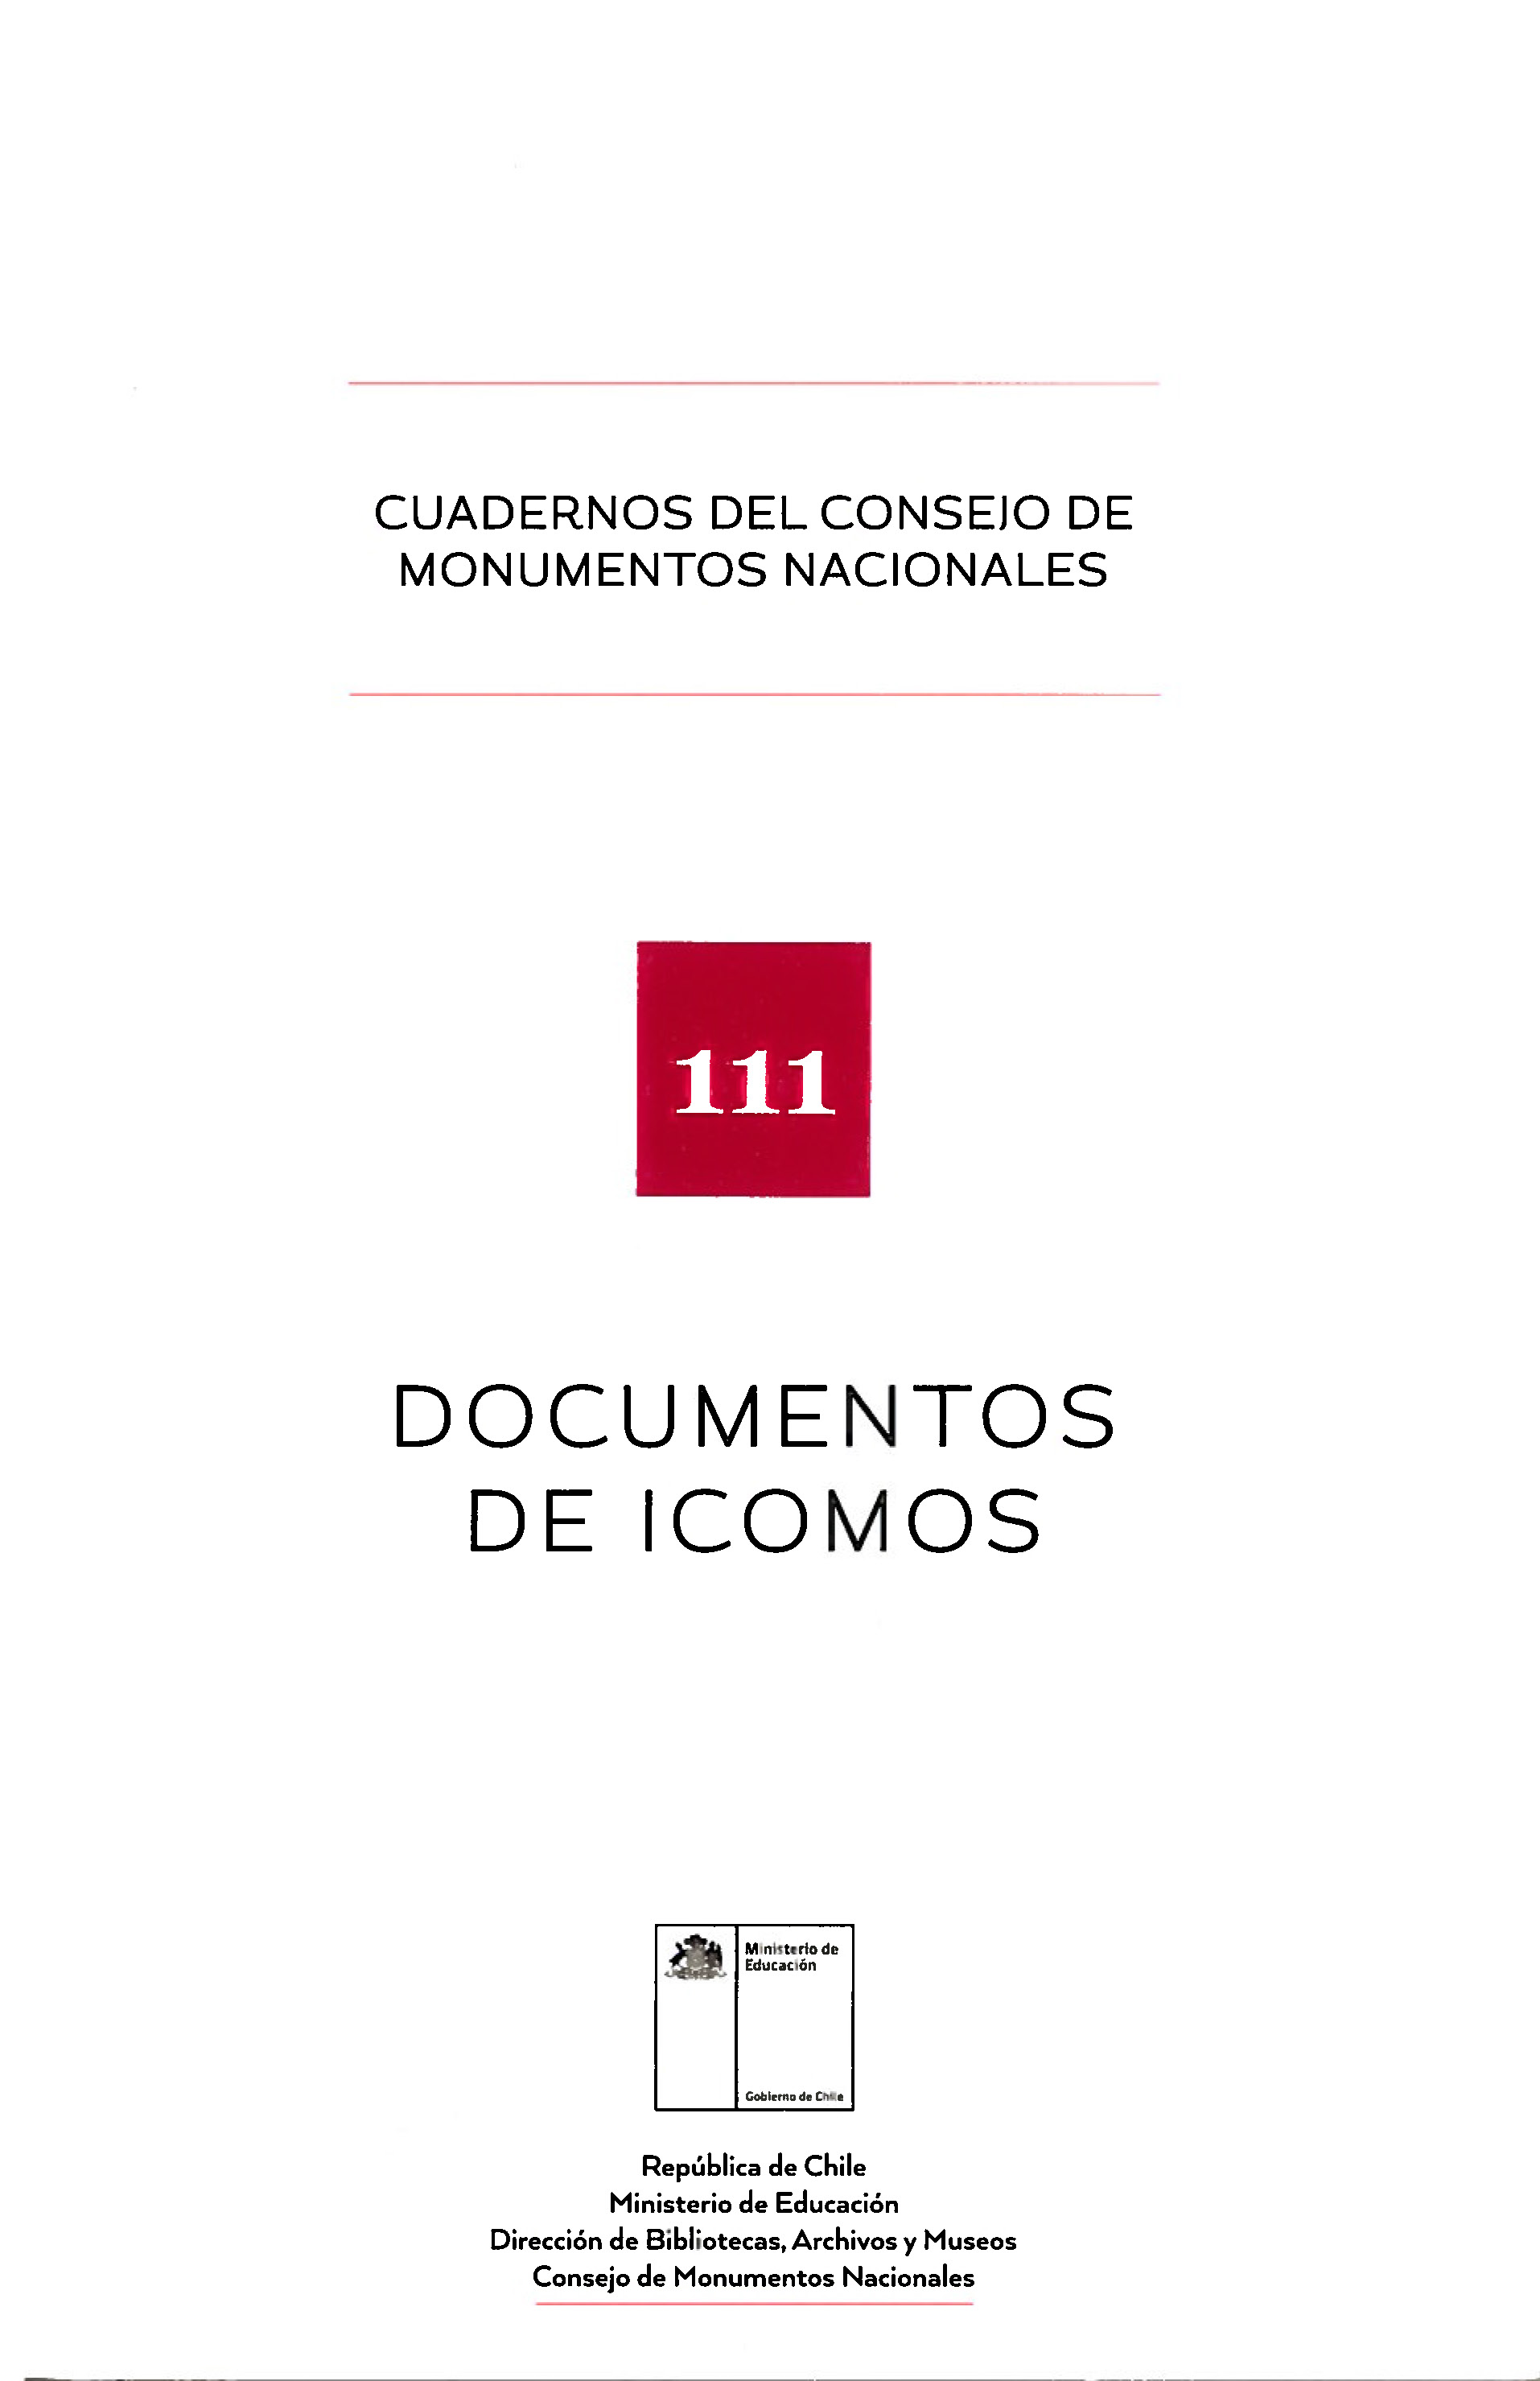 Cuaderno 111 DOCUMENTOS DE ICOMOS